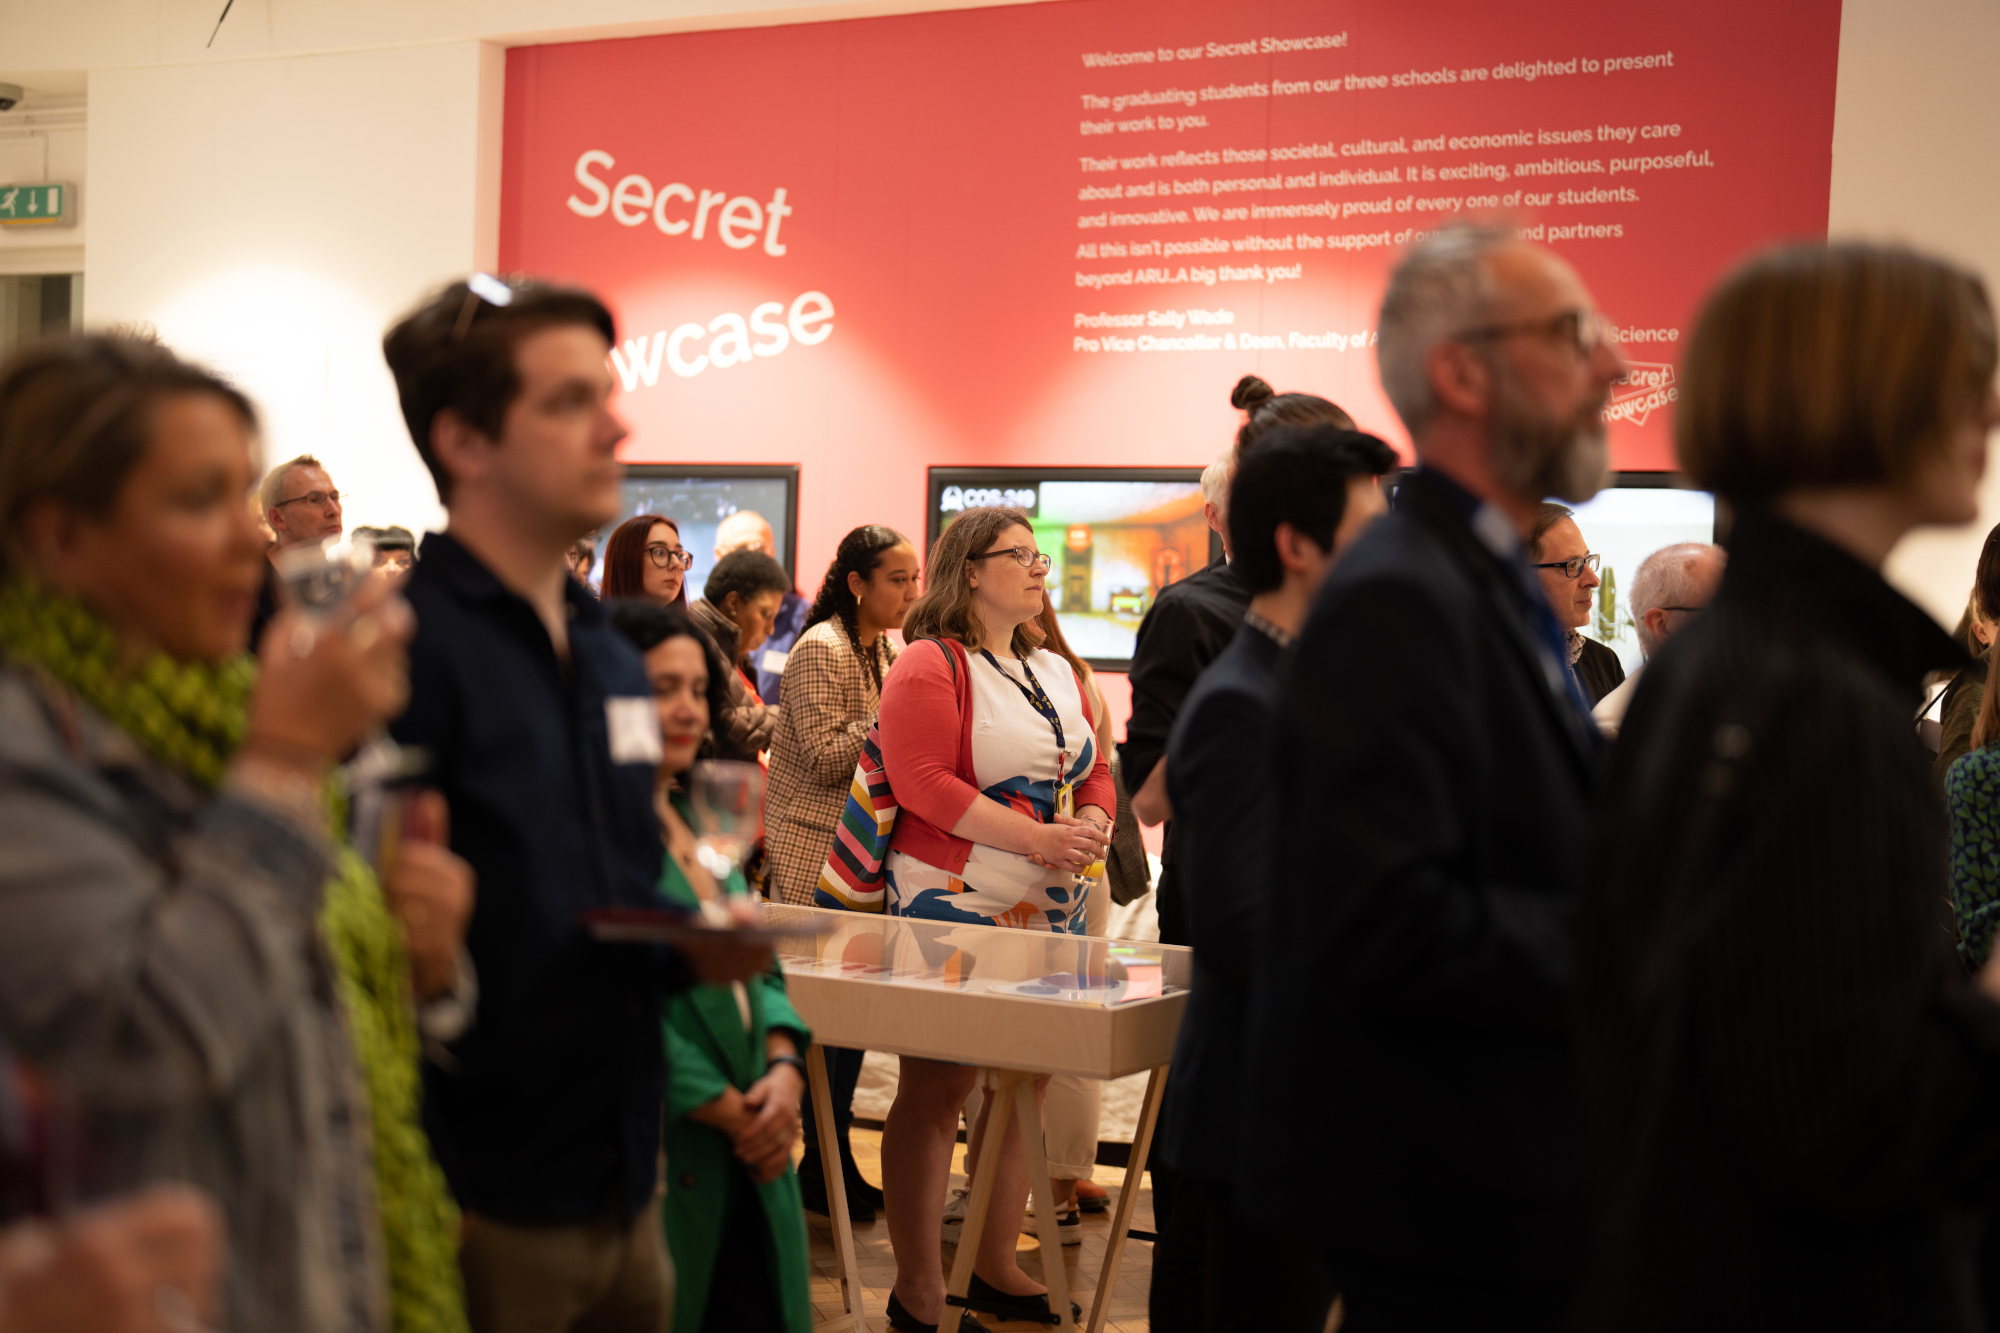 Visitors watching talks beneath a large Secret Showcase poster